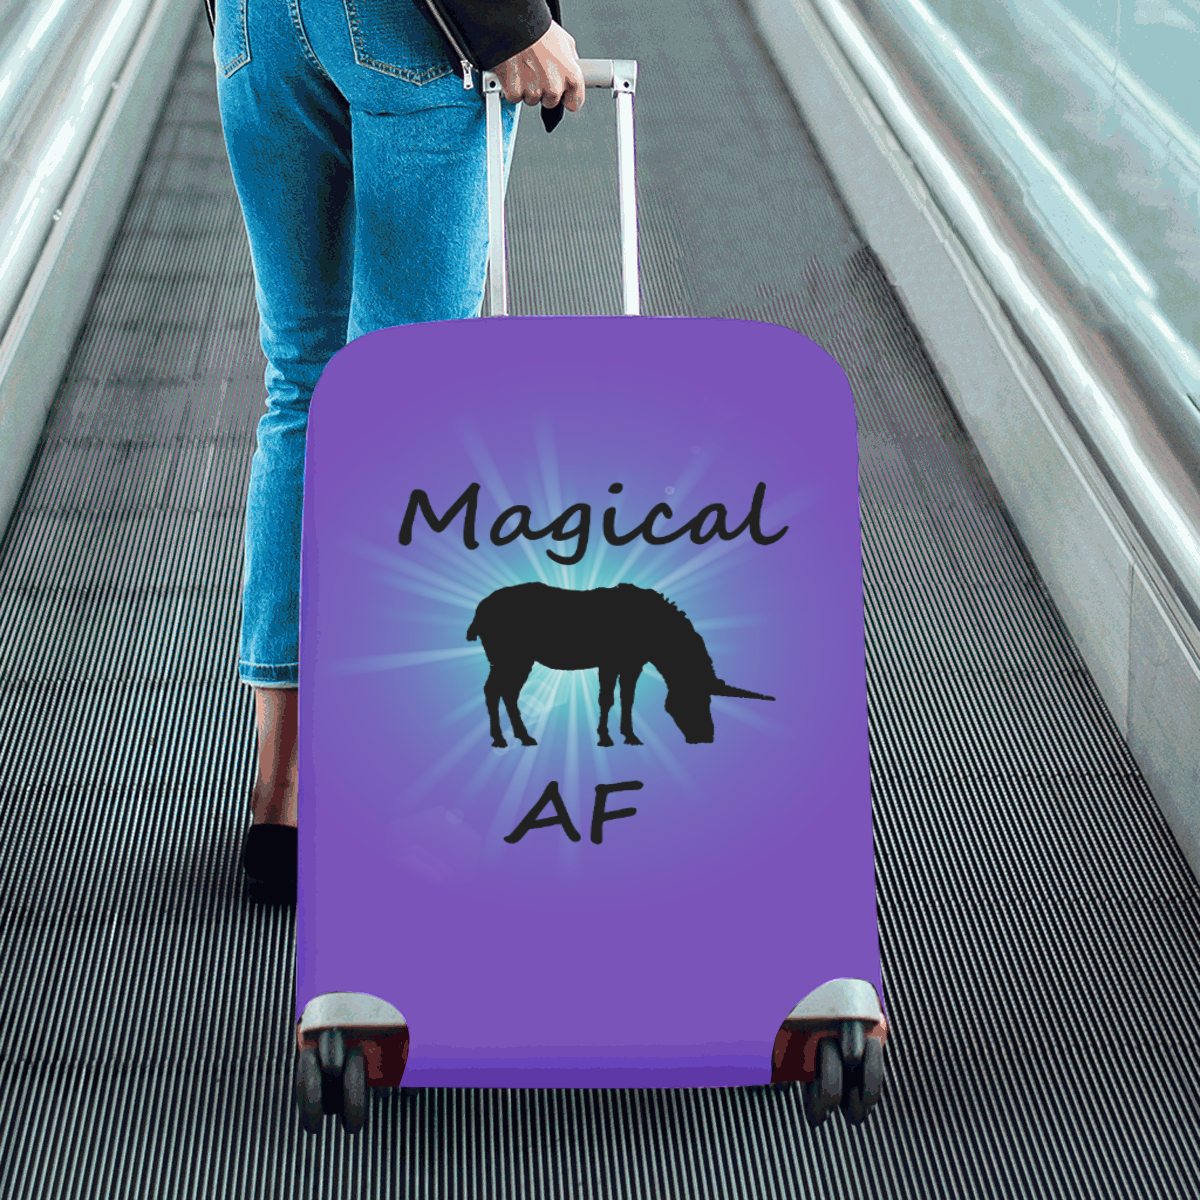 unicorn magical af Luggage Cover/Large 26"-28"